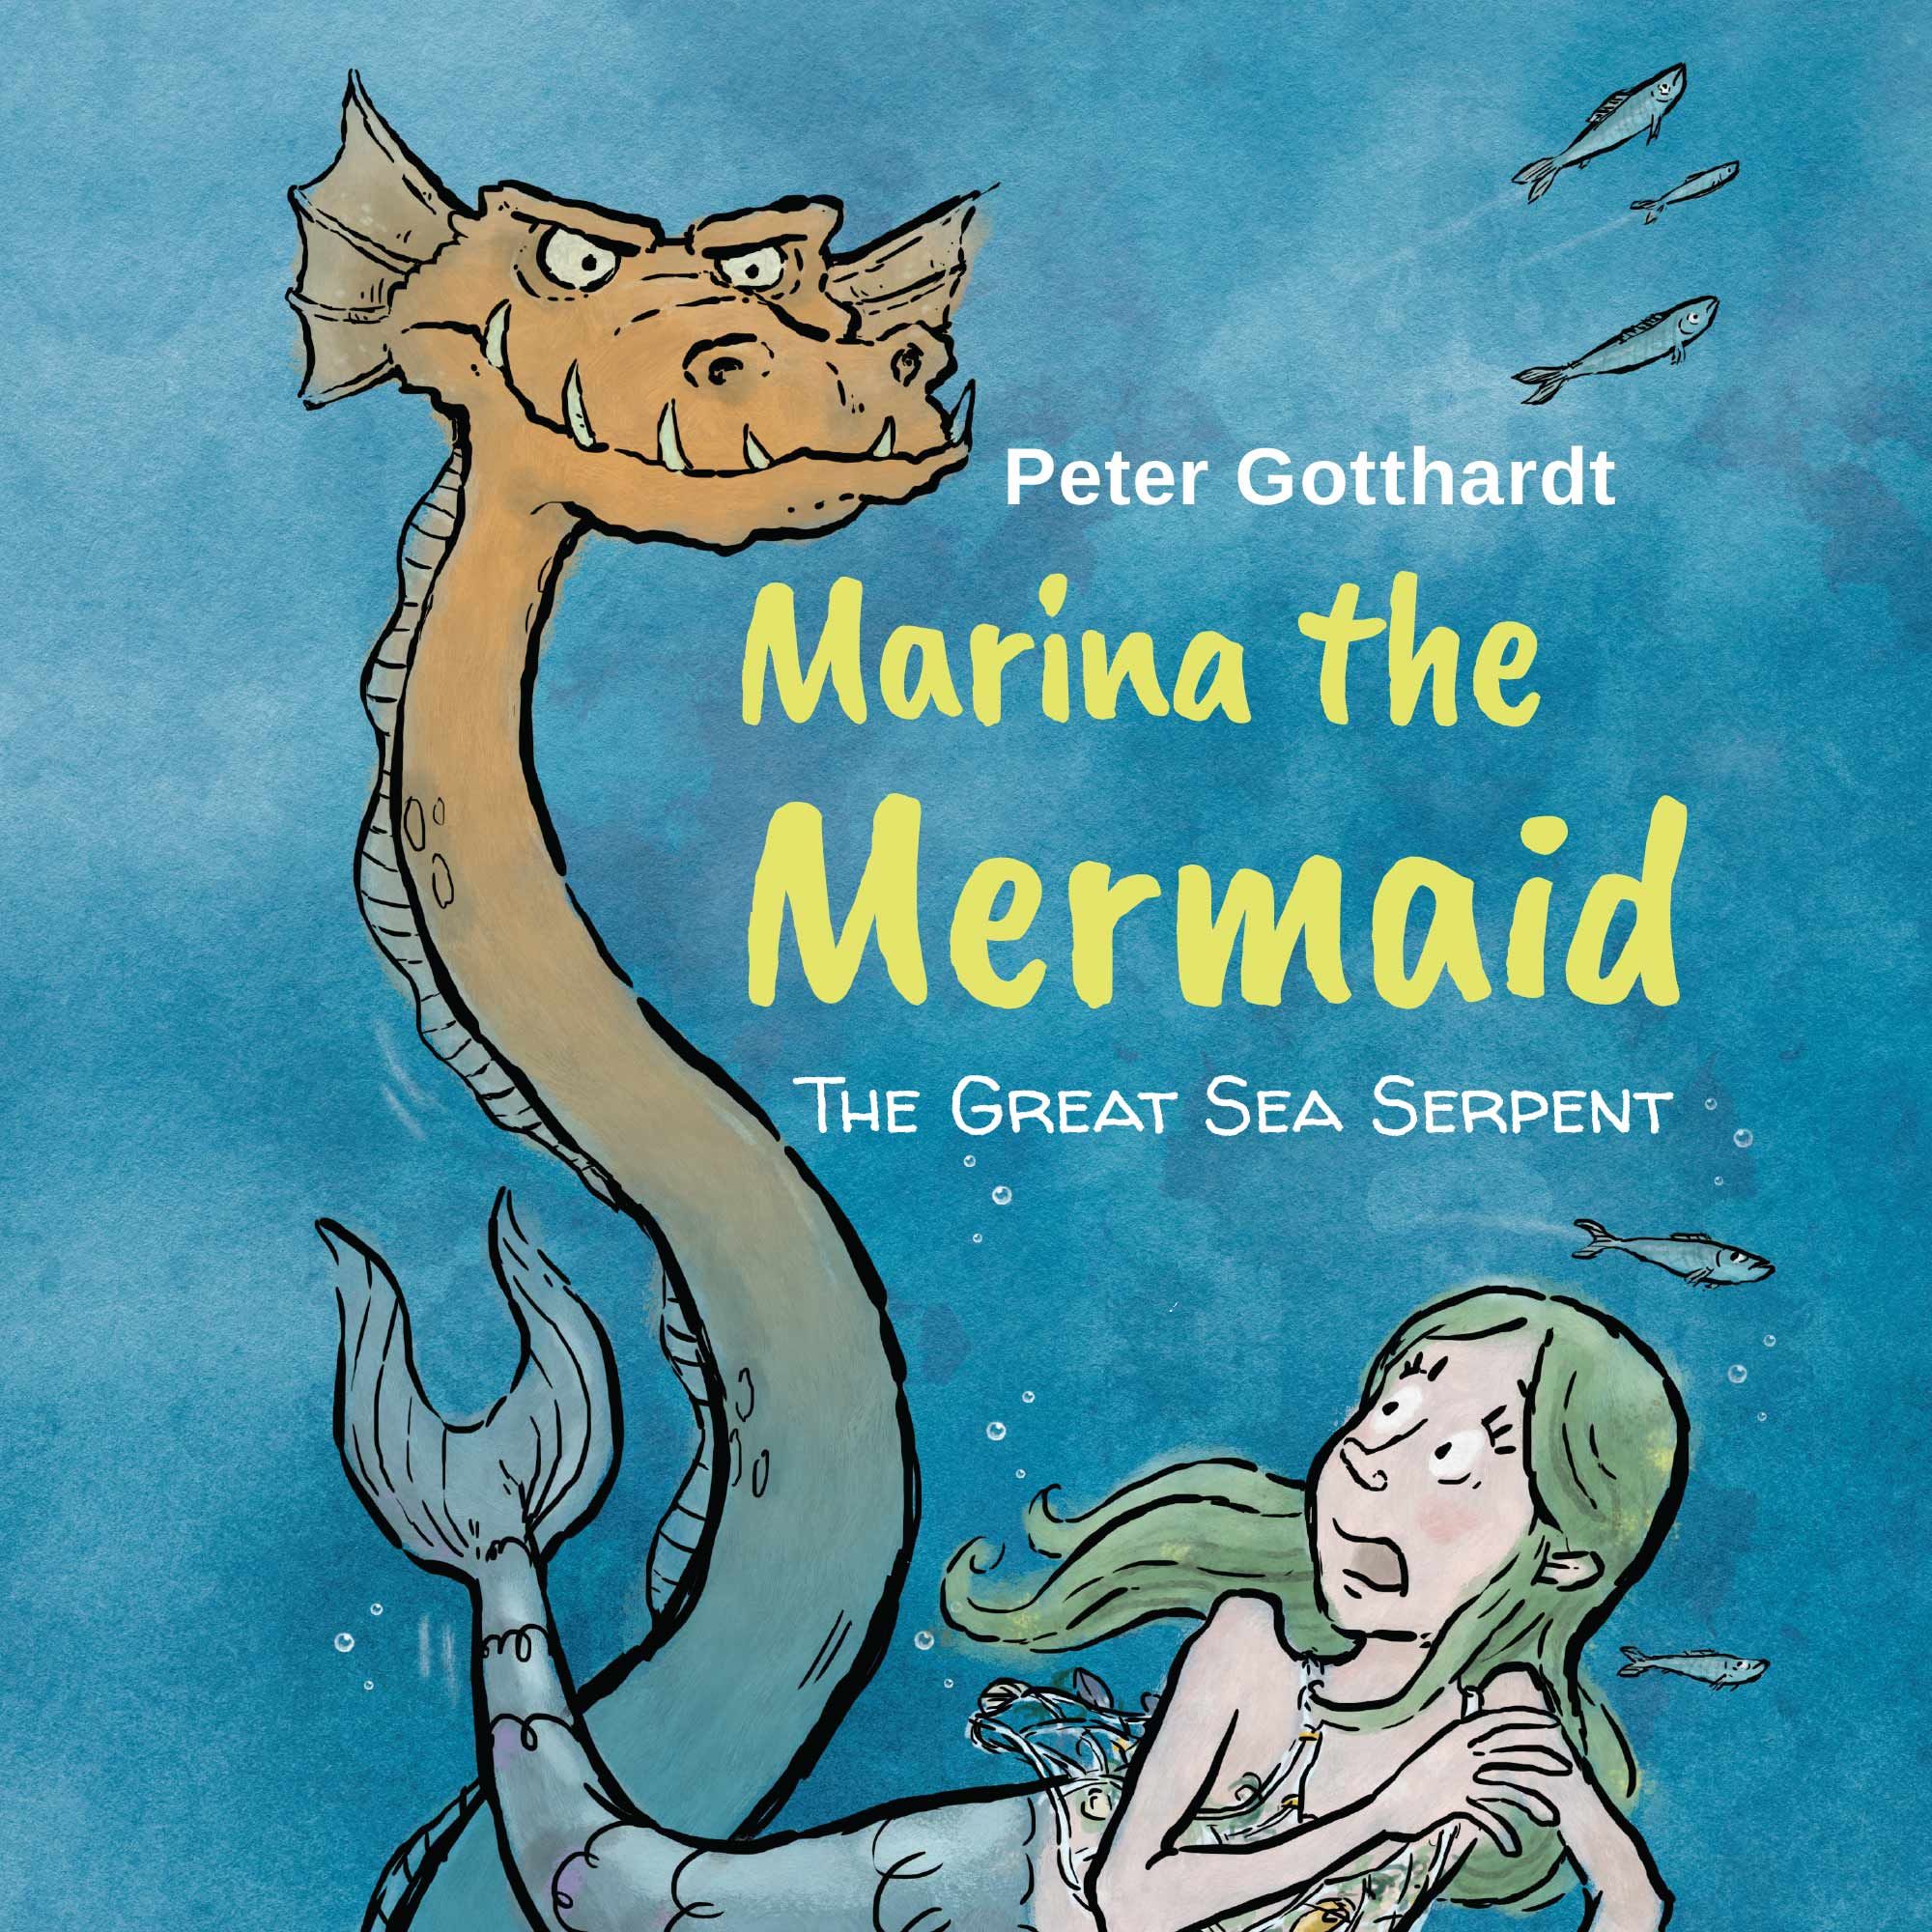 Marina the Mermaid #2: The Great Sea Serpent, ljudbok av Peter Gotthardt